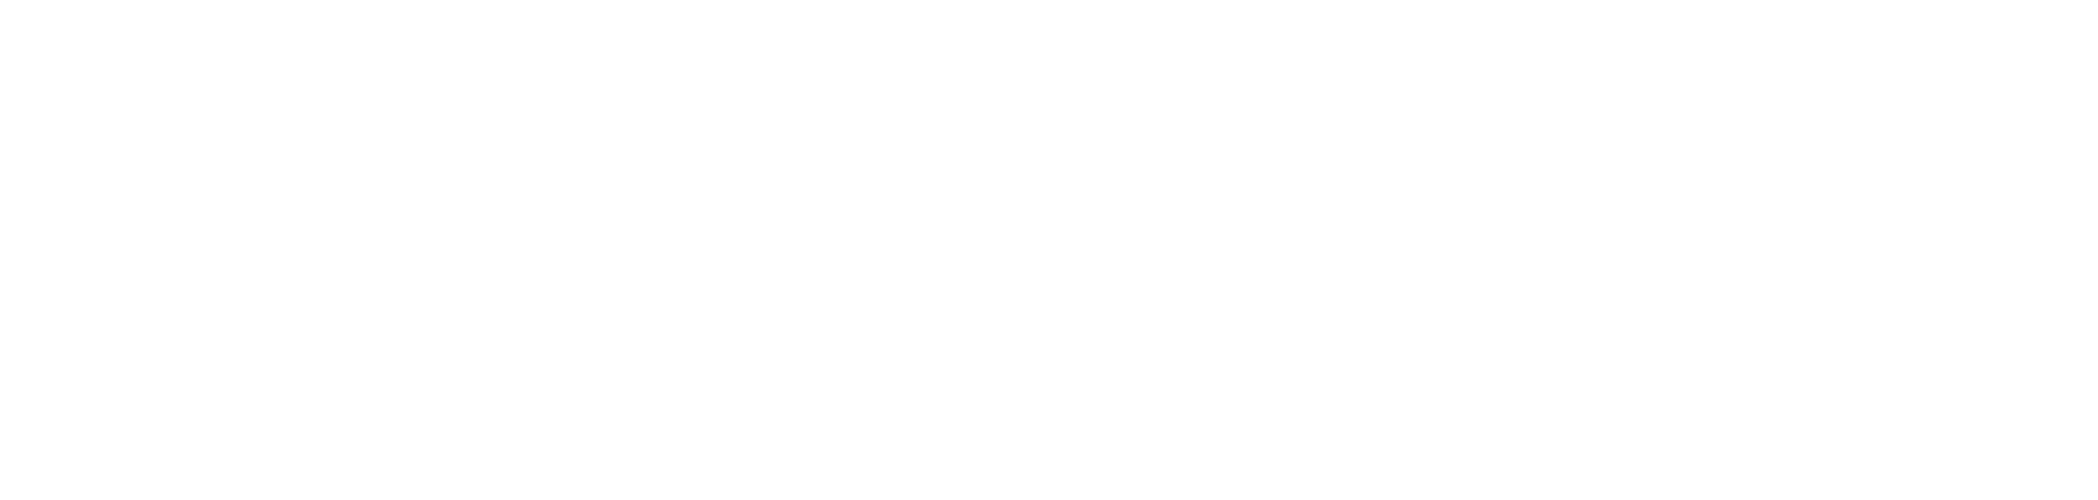 Scheidt Bachmann logo